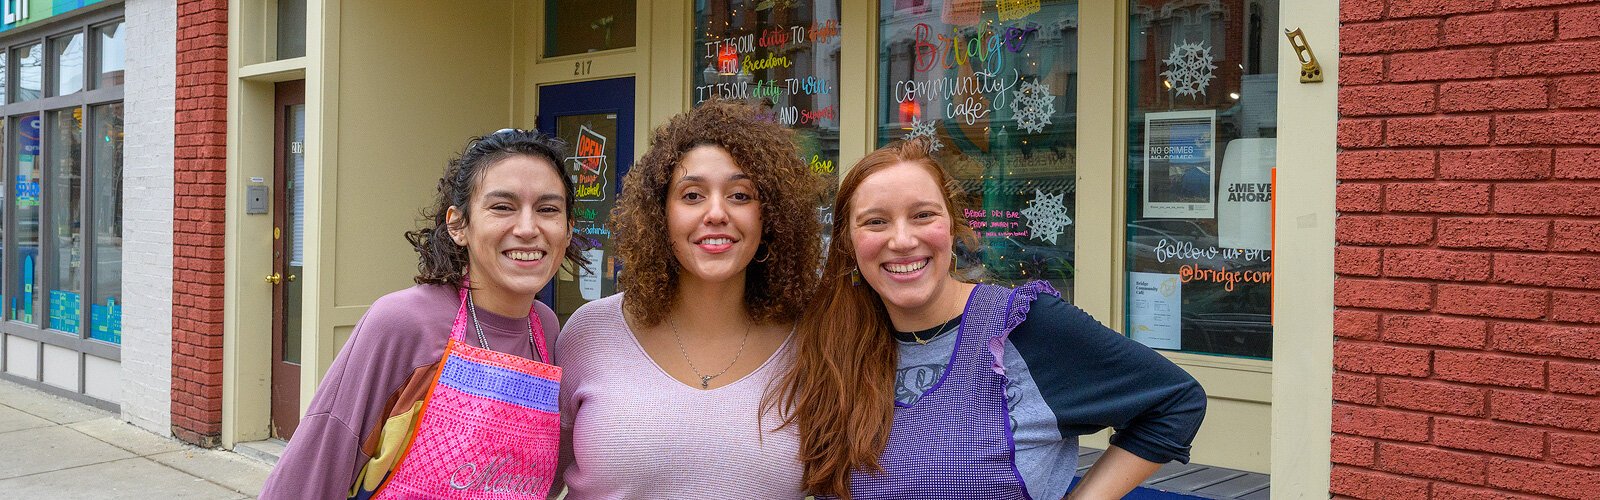 Sierra Lambert, Gabrielle Watts, and Maria Pomo Castillo at Bridge Community Cafe.